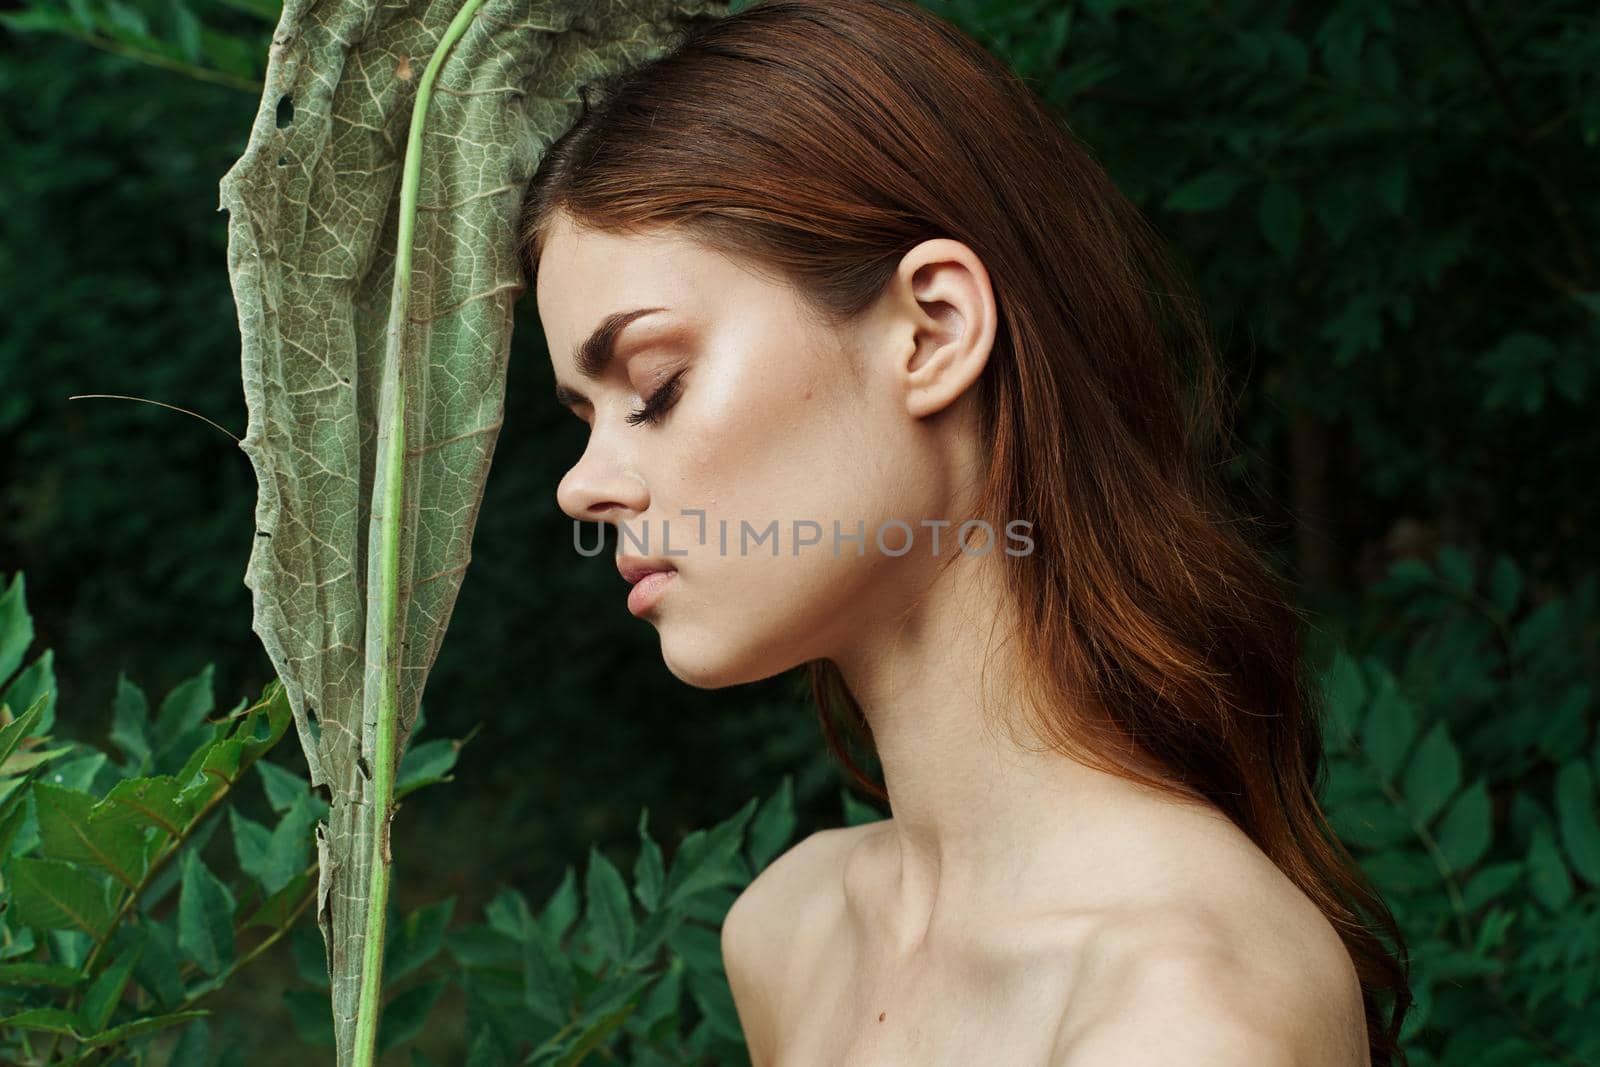 pretty woman bared shoulders green bush cosmetics cropped view by Vichizh